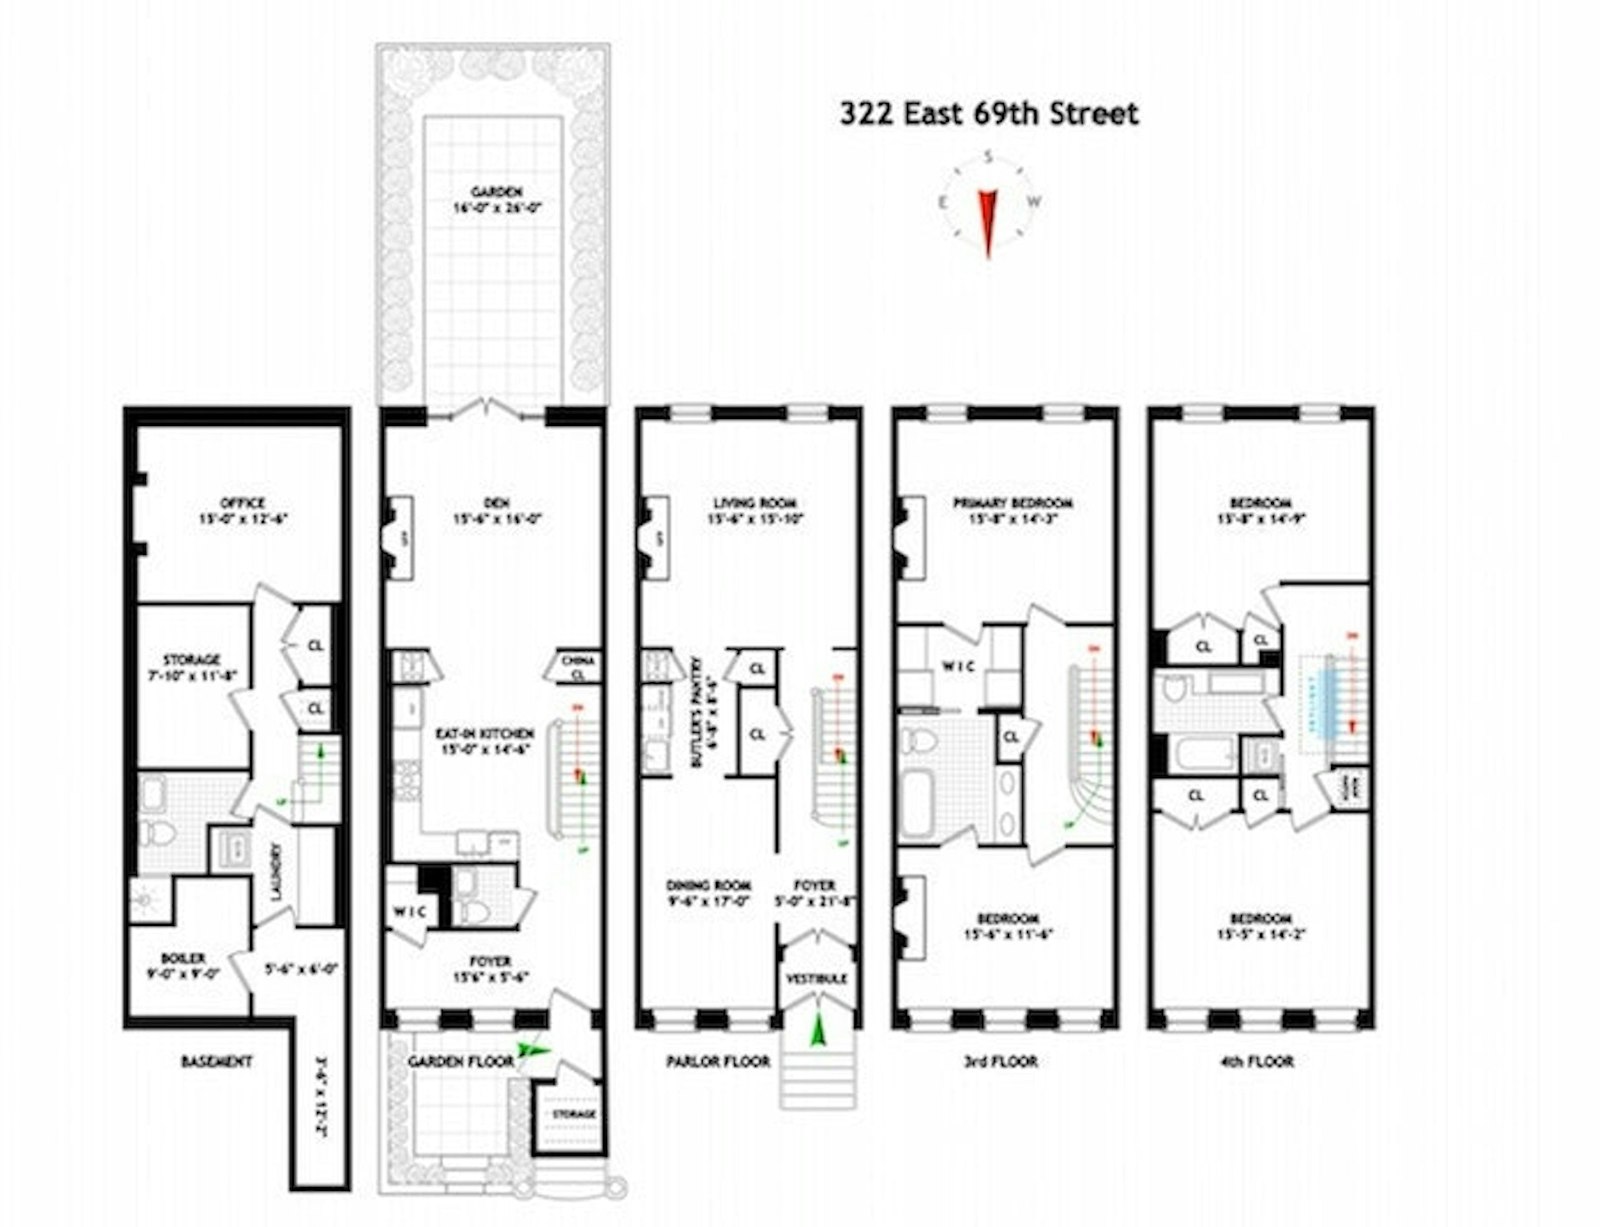 Floorplan for 322 East 69th Street